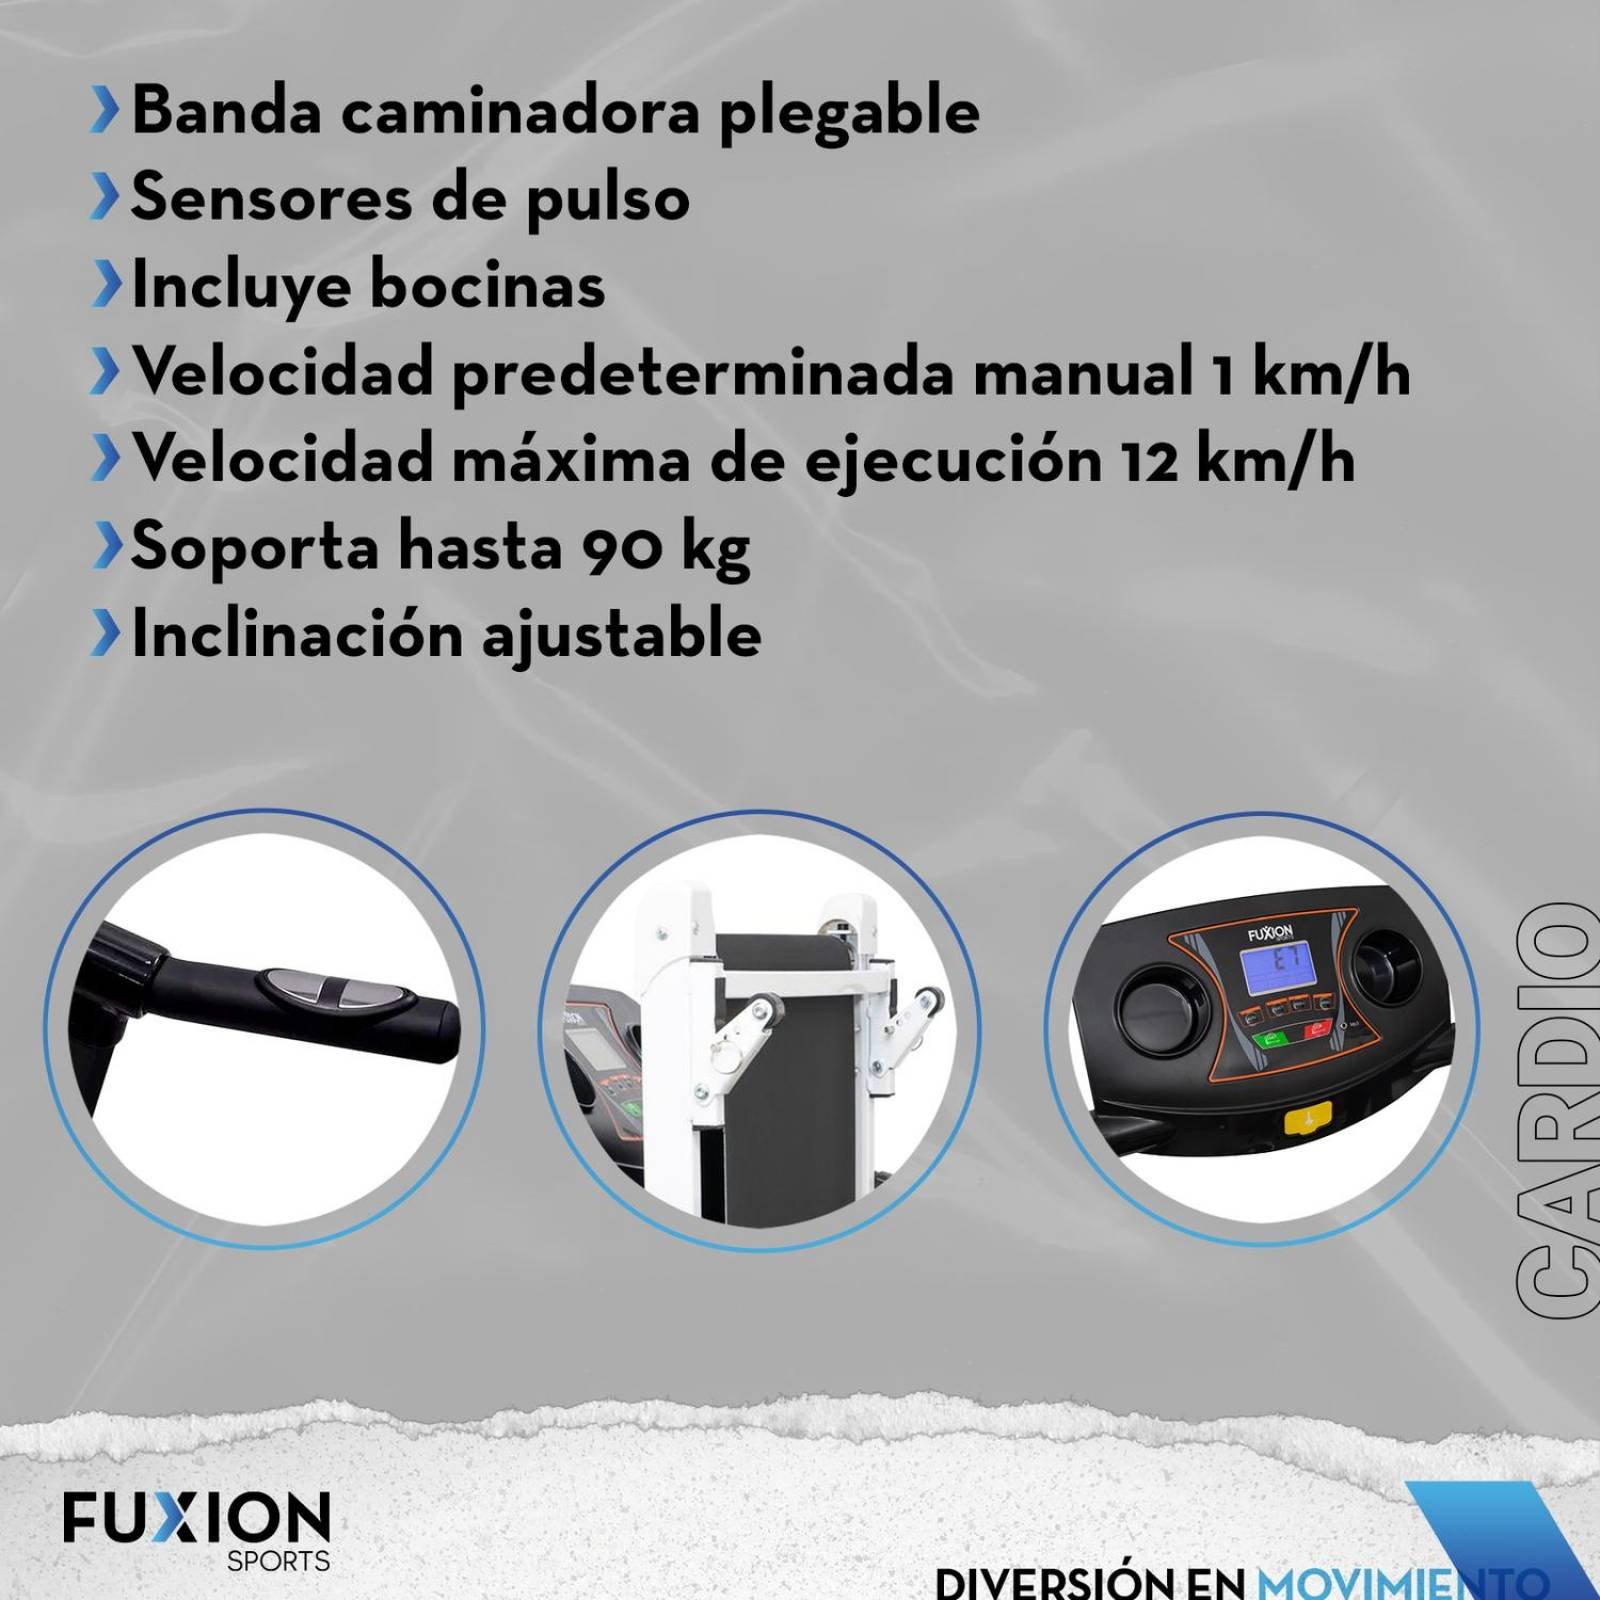 Caminadora Fuxion Sports Eléctrica Digital 1.5 HP Blanco